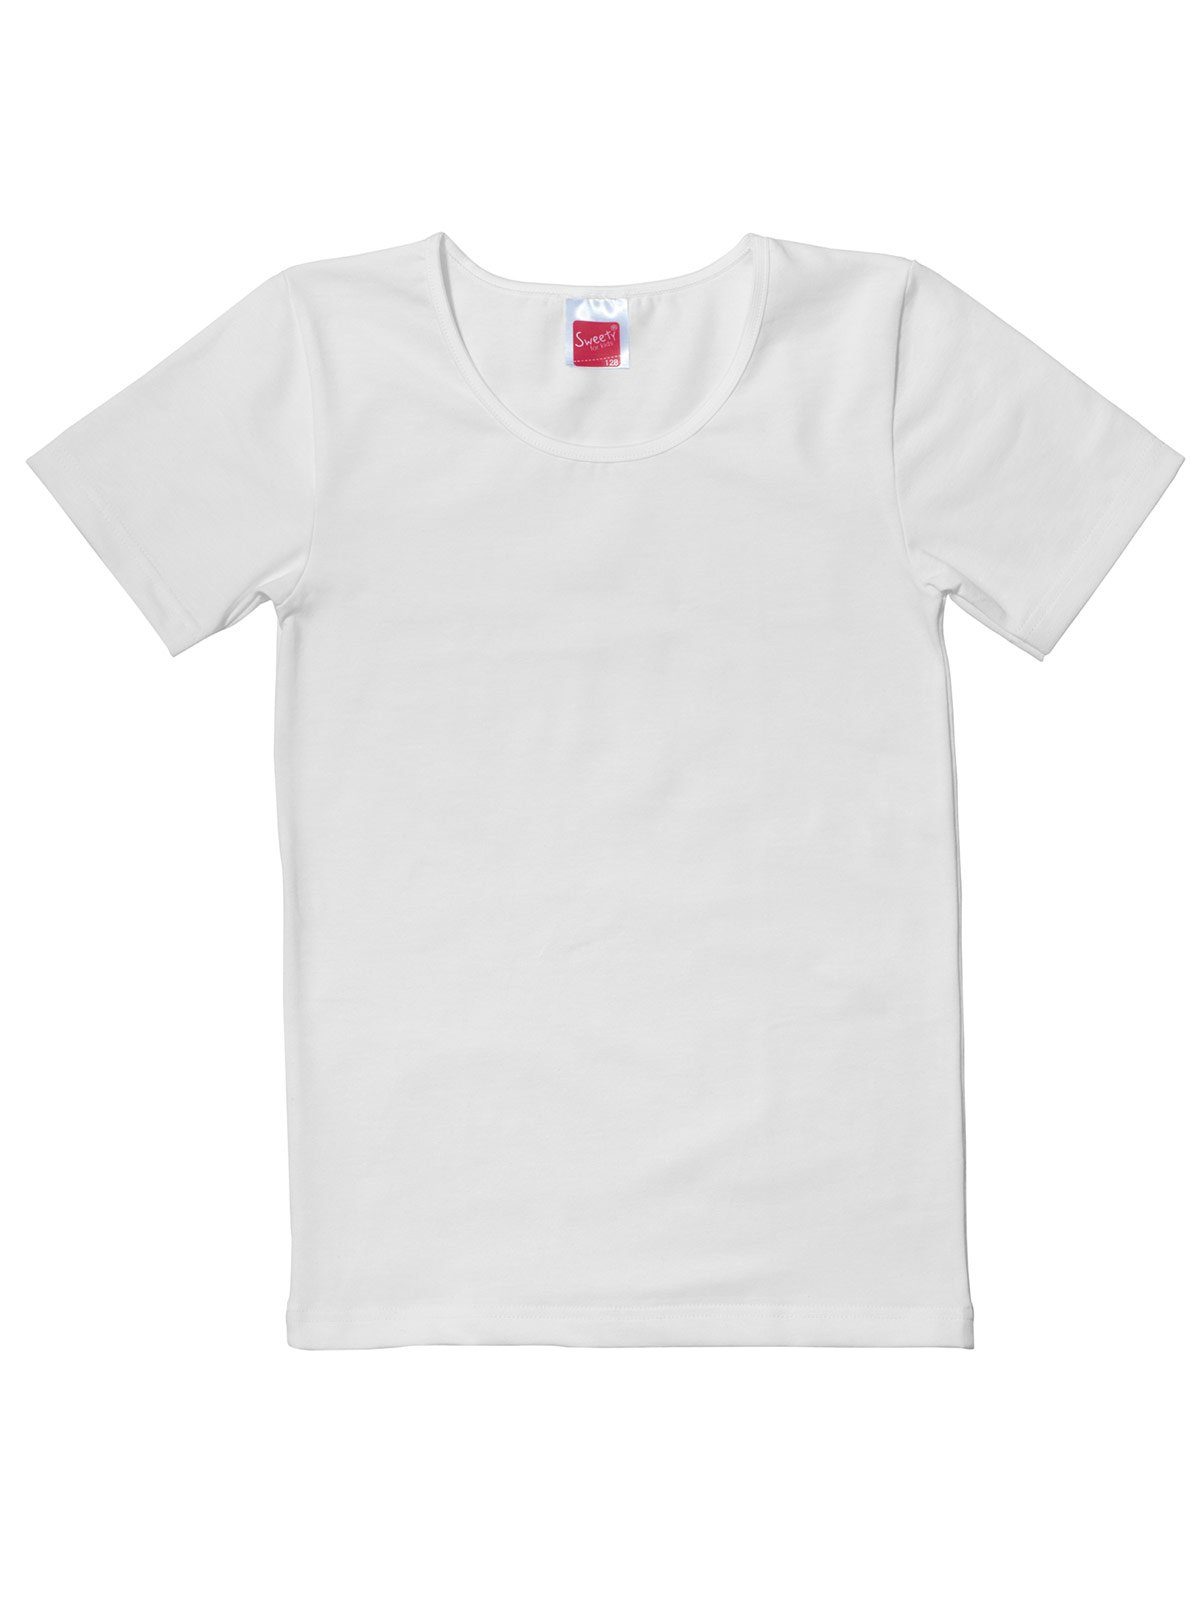 Single 1-St) Mädchen (Stück, Unterhemd Sweety hohe Kids Shirt Markenqualität Jersey for